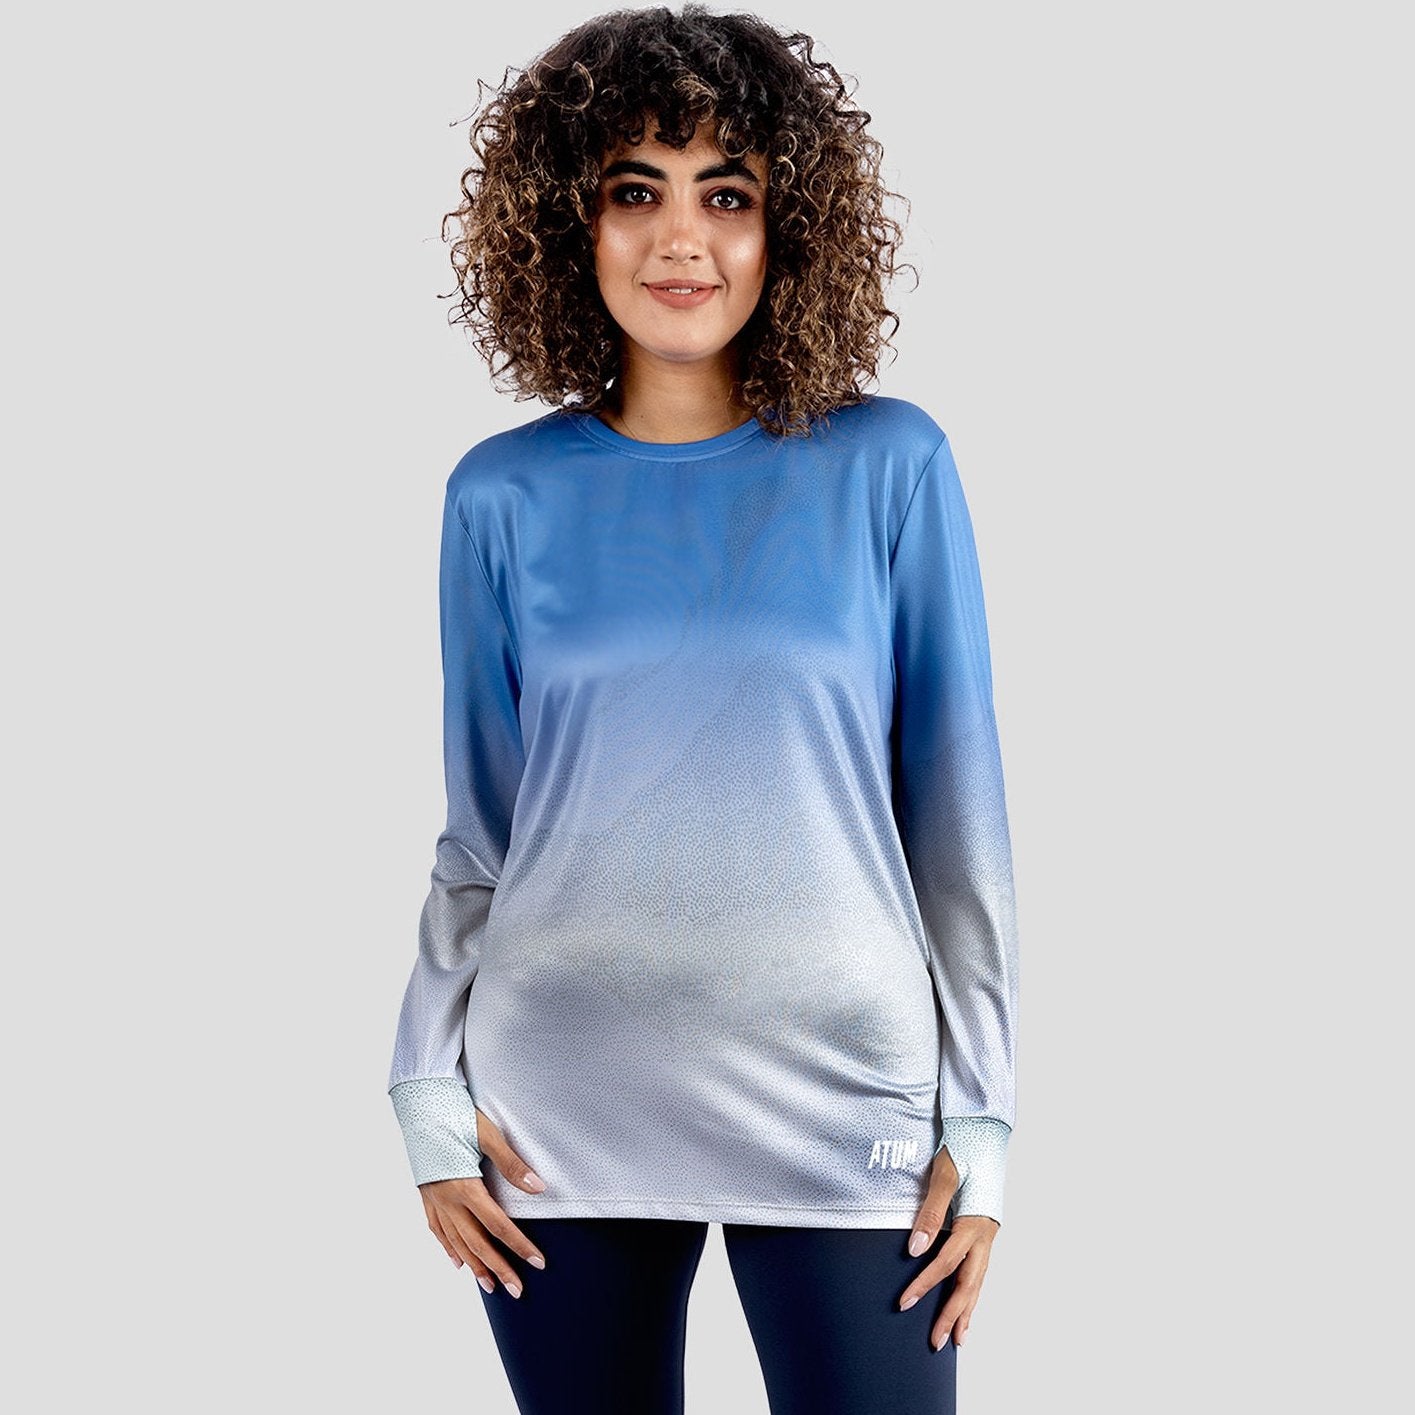 Atum women's gradient T-shirt